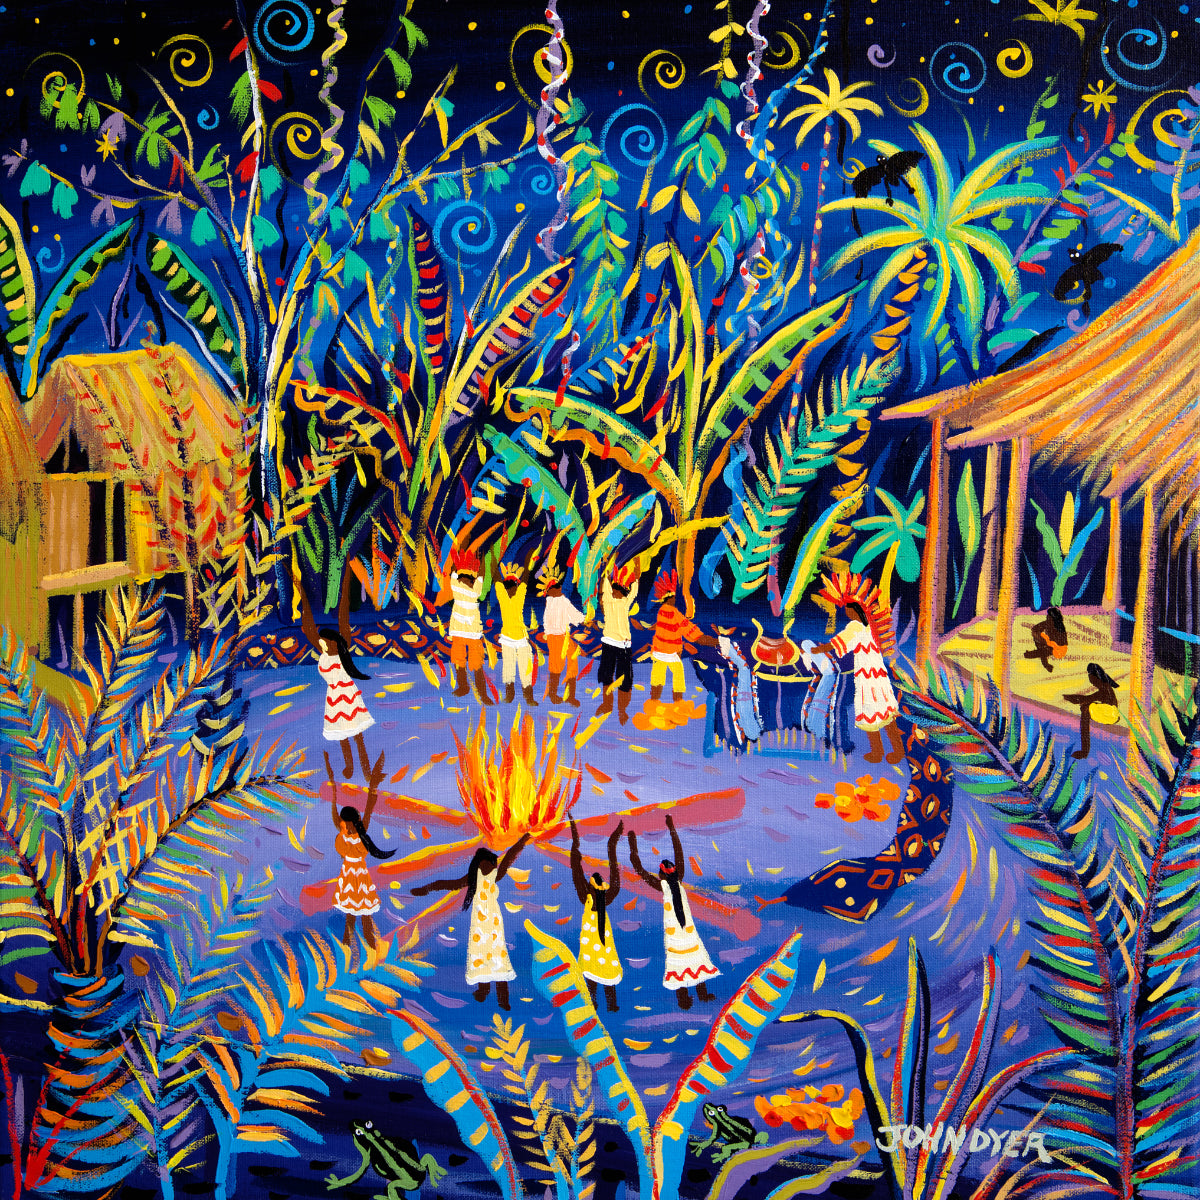 John Dyer Painting. Yawanawá Tribal Ayahuasca Ceremony, Amazon Rainforest